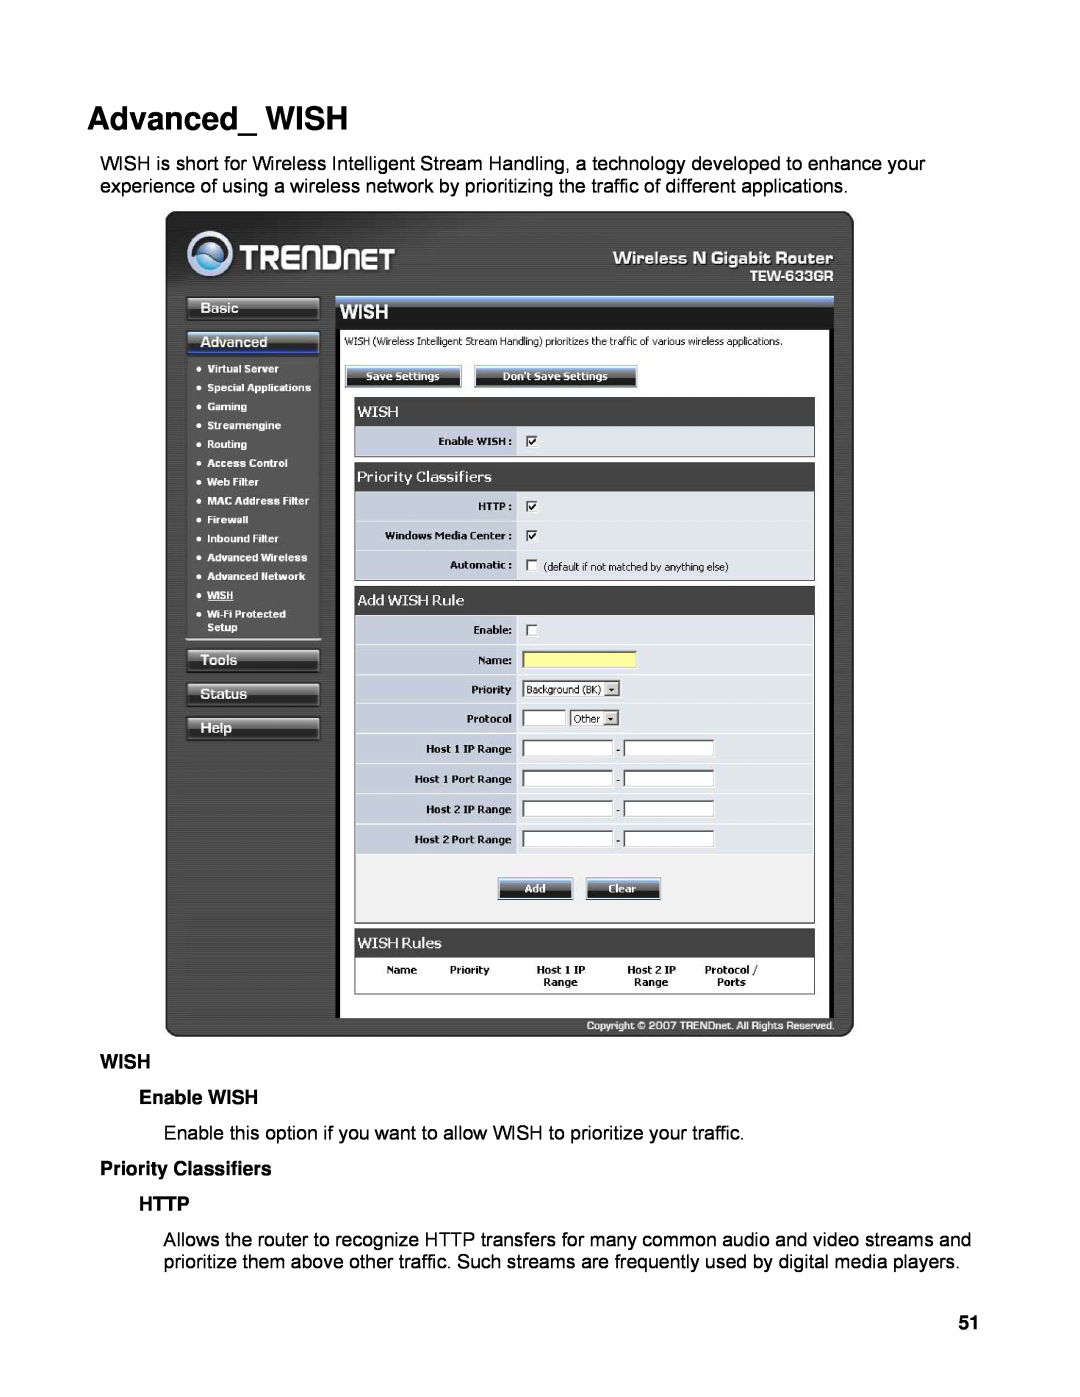 TRENDnet TEW-633GR manual Advanced WISH, WISH Enable WISH, Priority Classifiers HTTP 